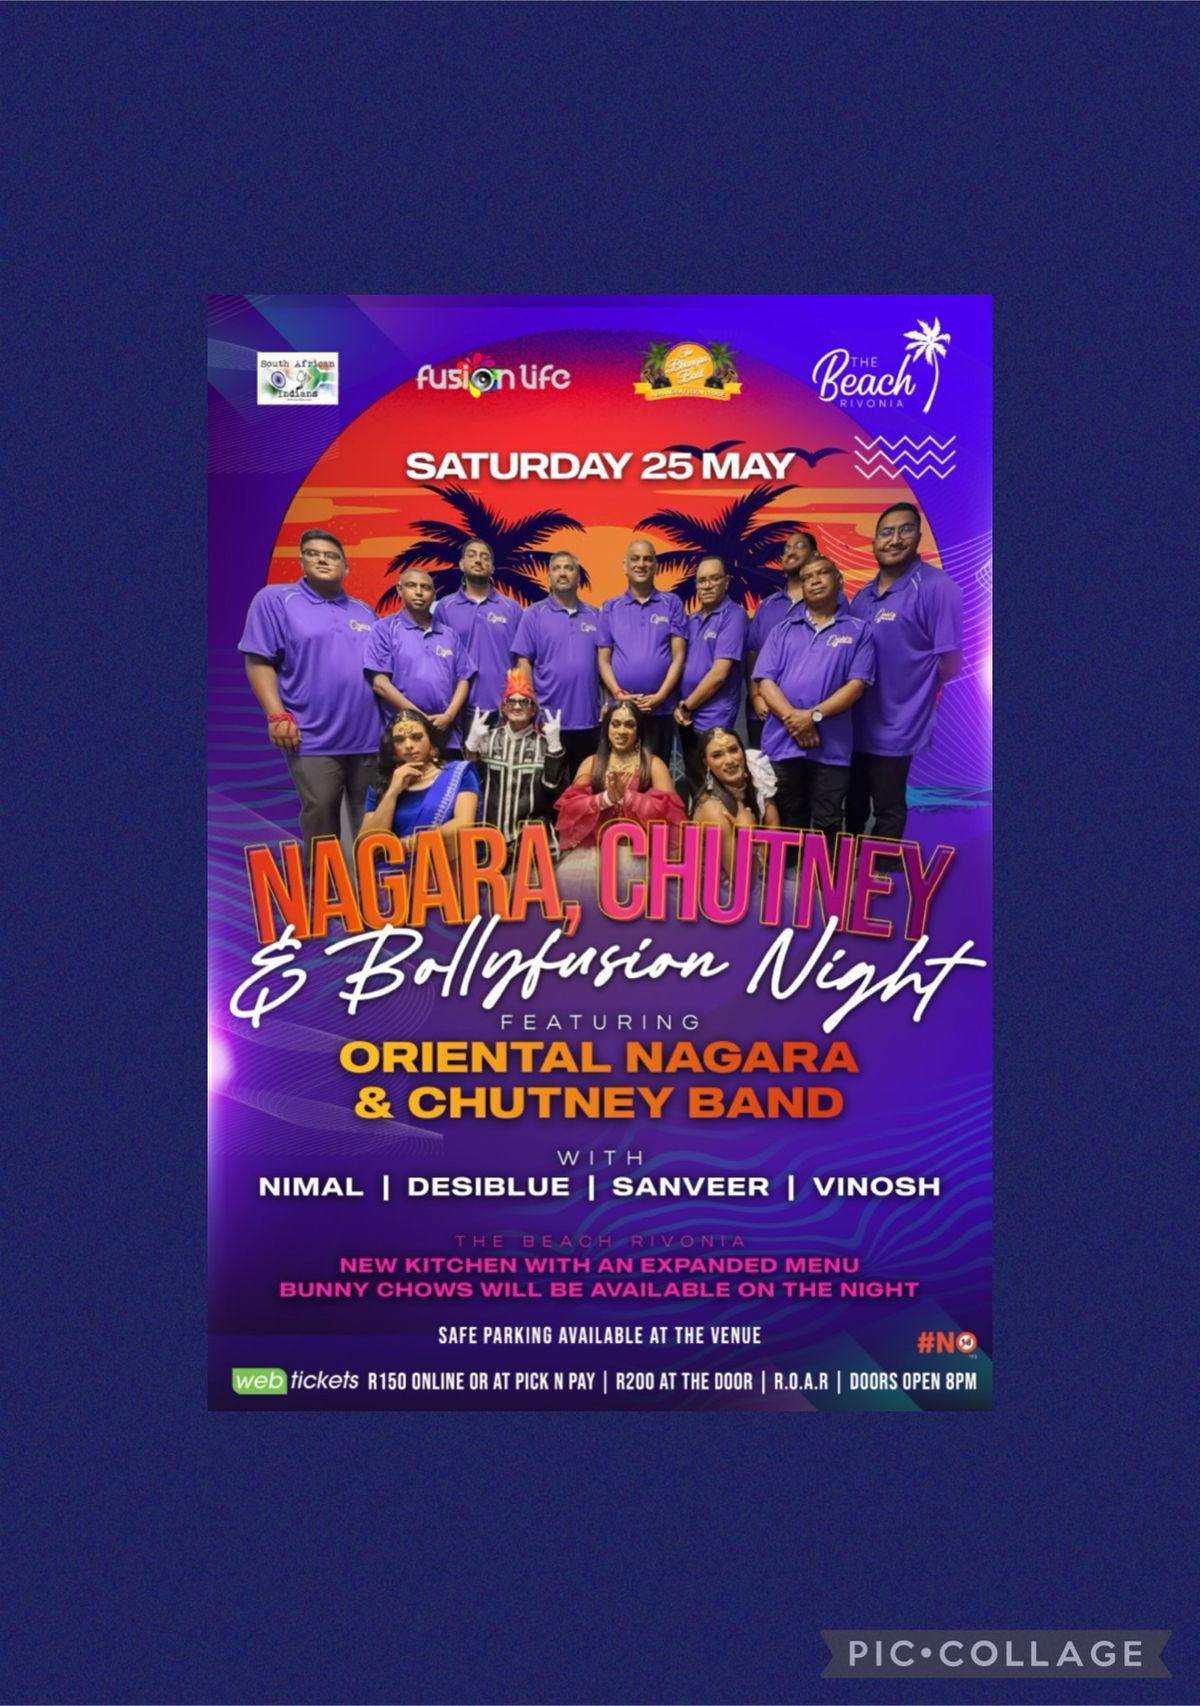 Nagara, Chutney and Bollyfusion Night